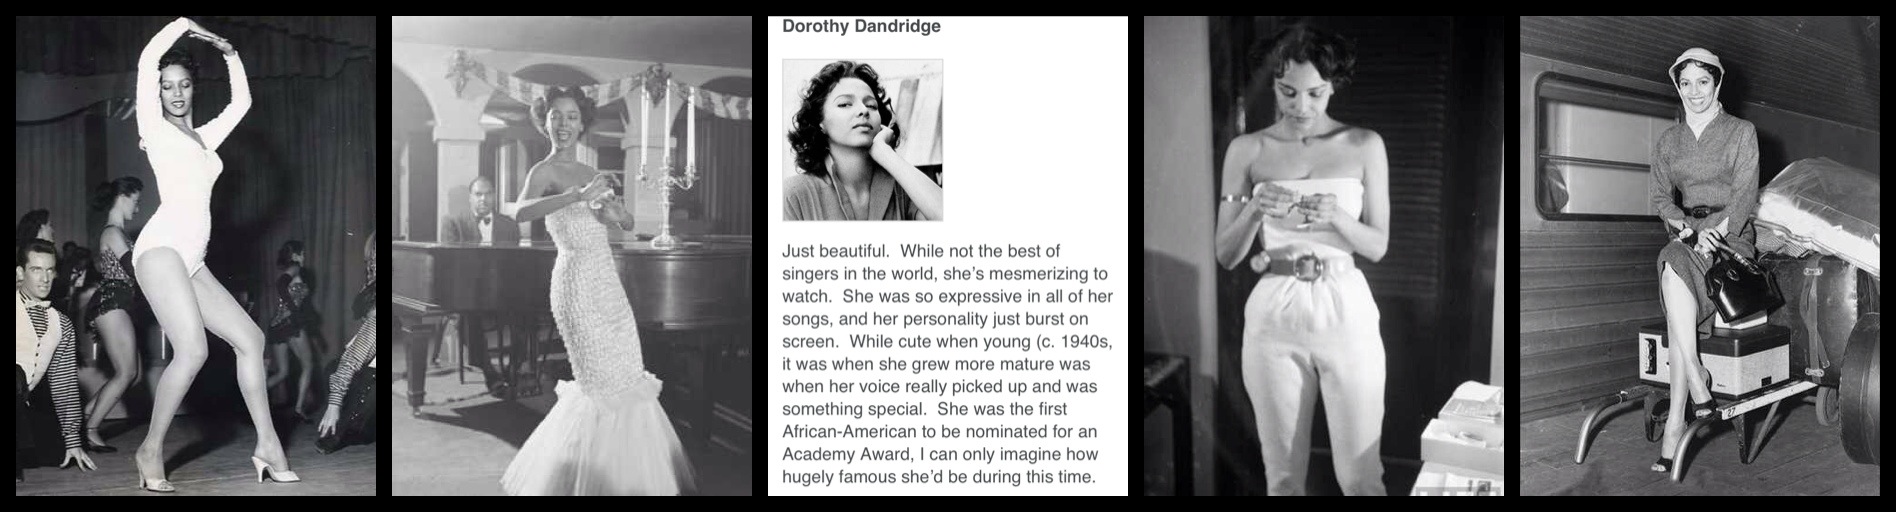 Dorothy Dandridge: Black History Month Dedication.